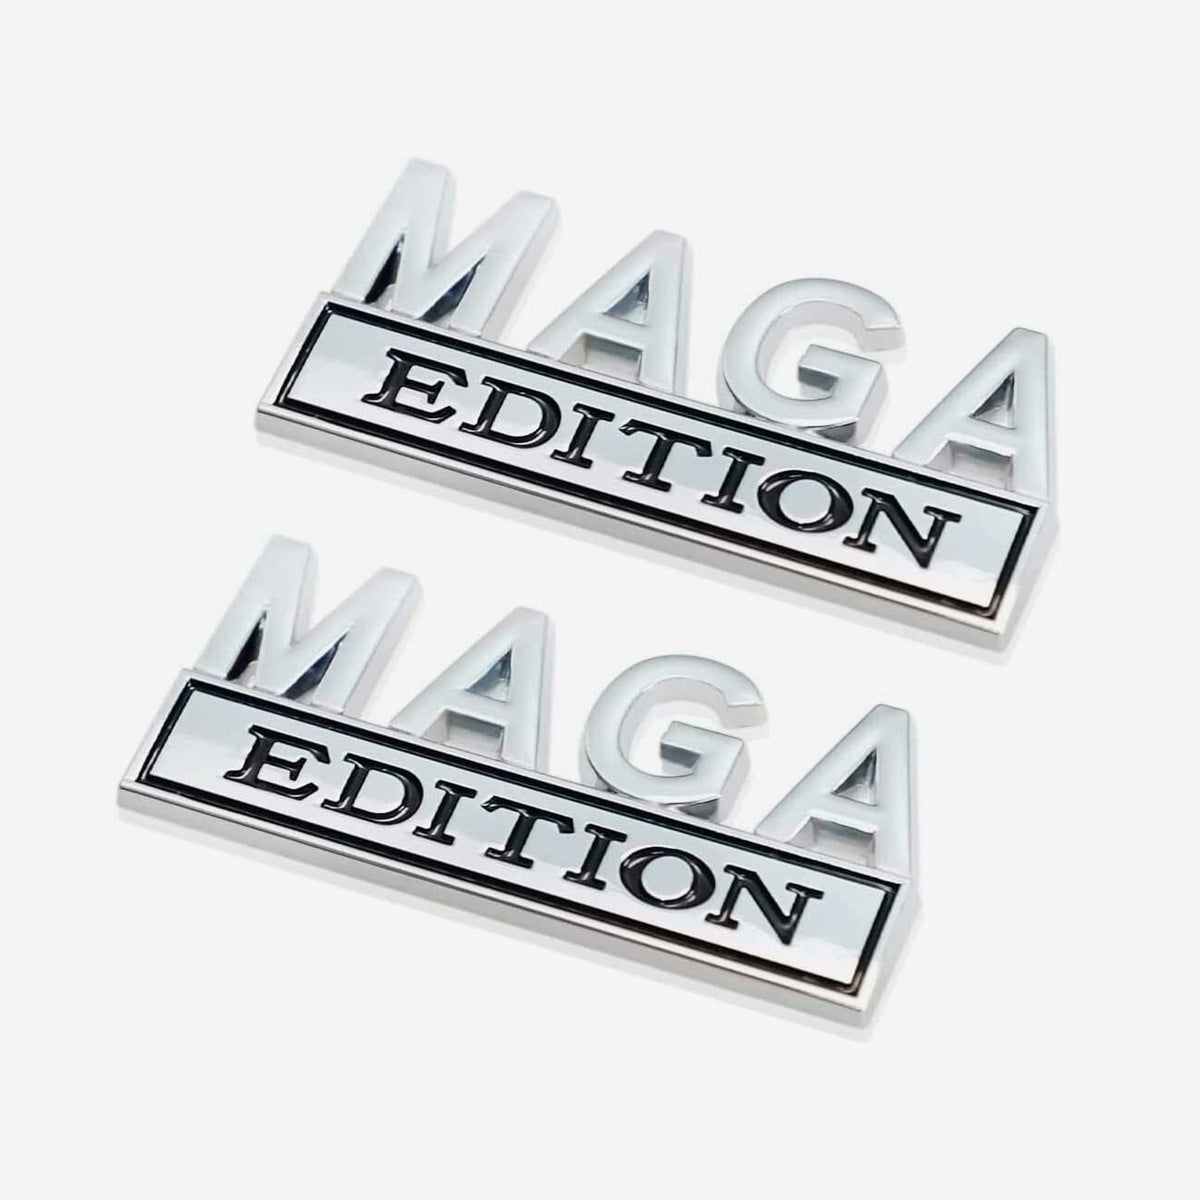 MAGA Edition Emblem